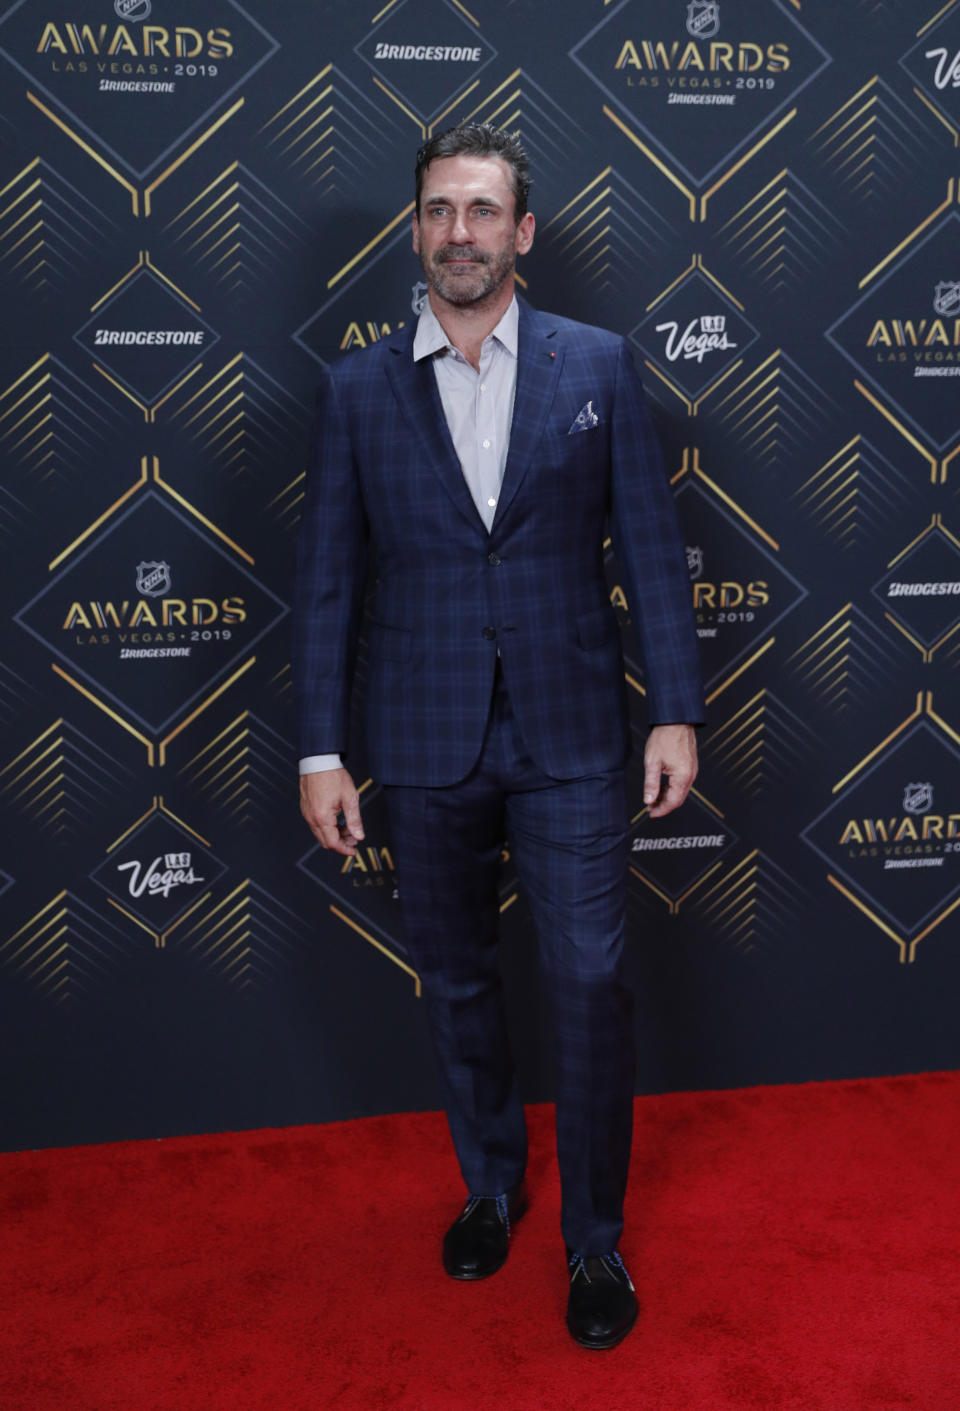 Jon Hamm poses on the red carpet before the NHL Awards, Wednesday, June 19, 2019, in Las Vegas. (AP Photo/John Locher)